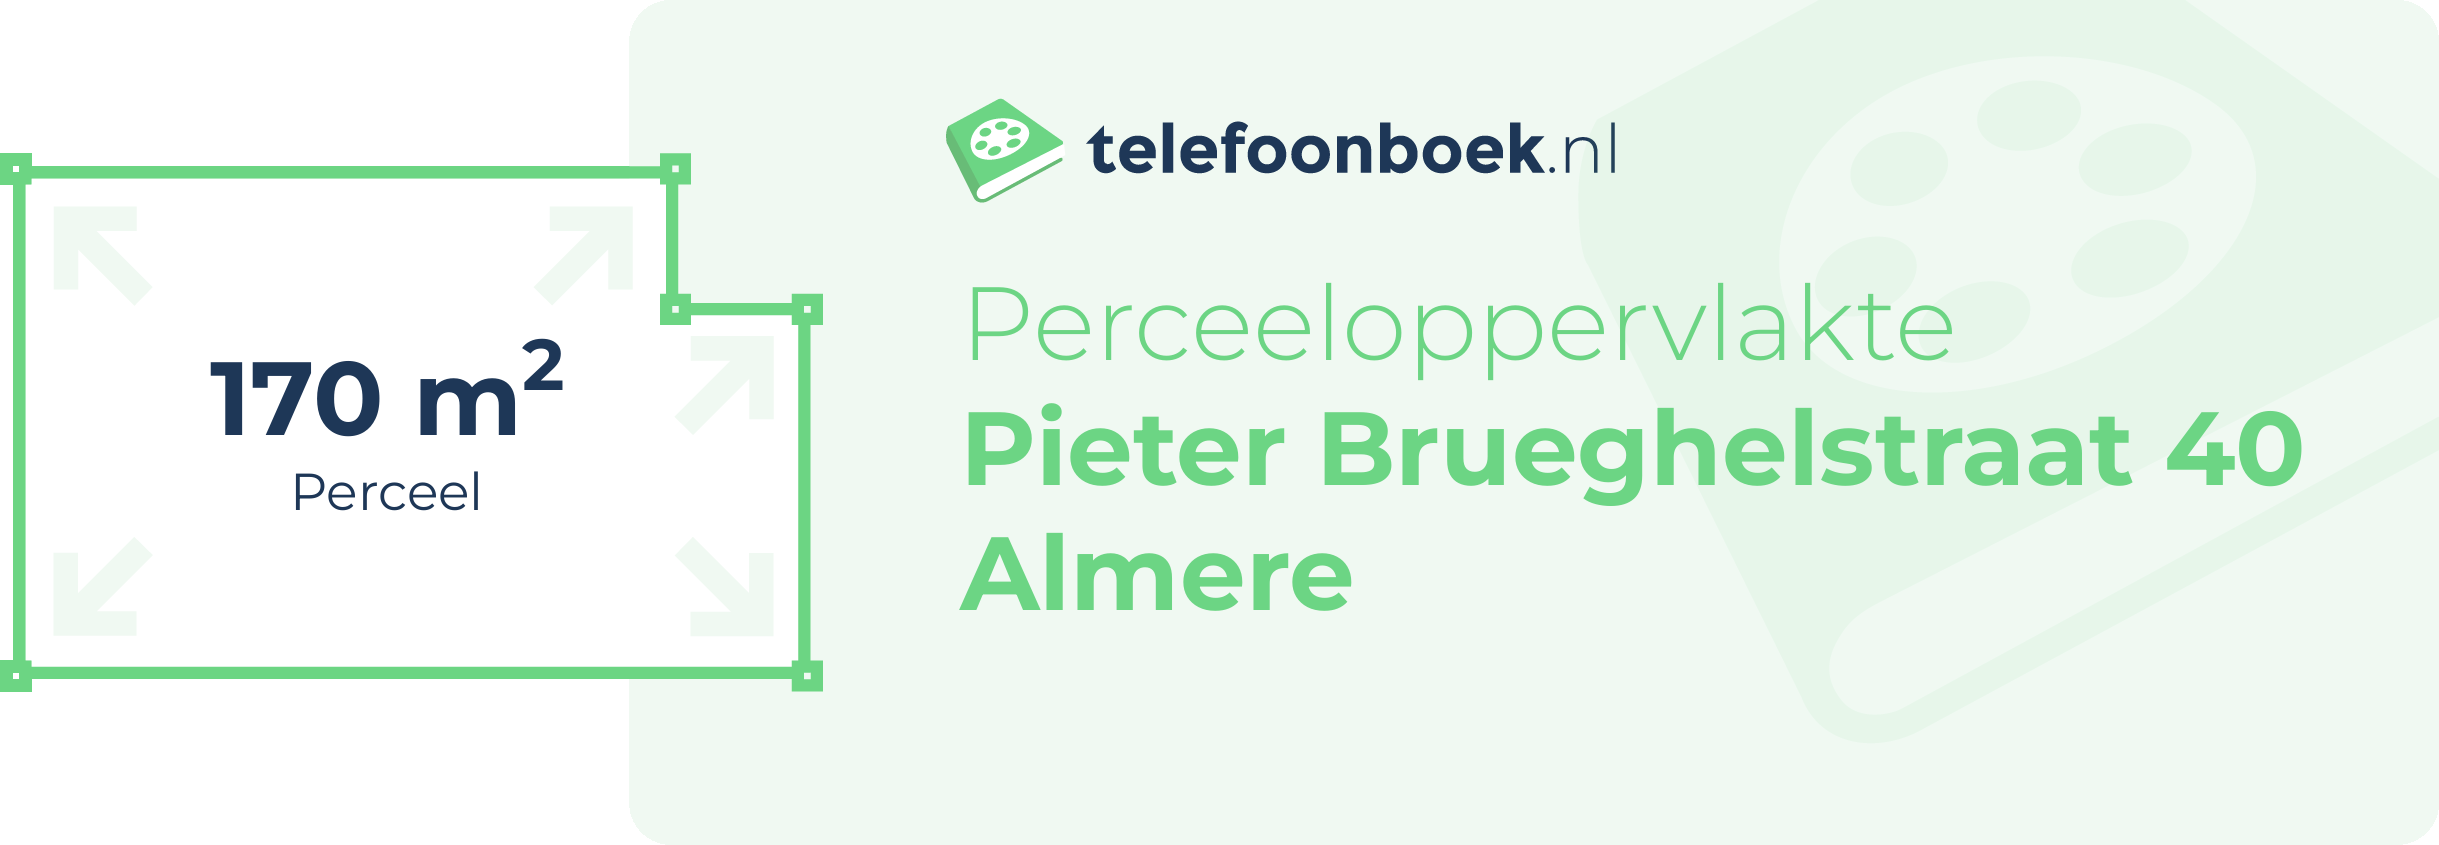 Perceeloppervlakte Pieter Brueghelstraat 40 Almere